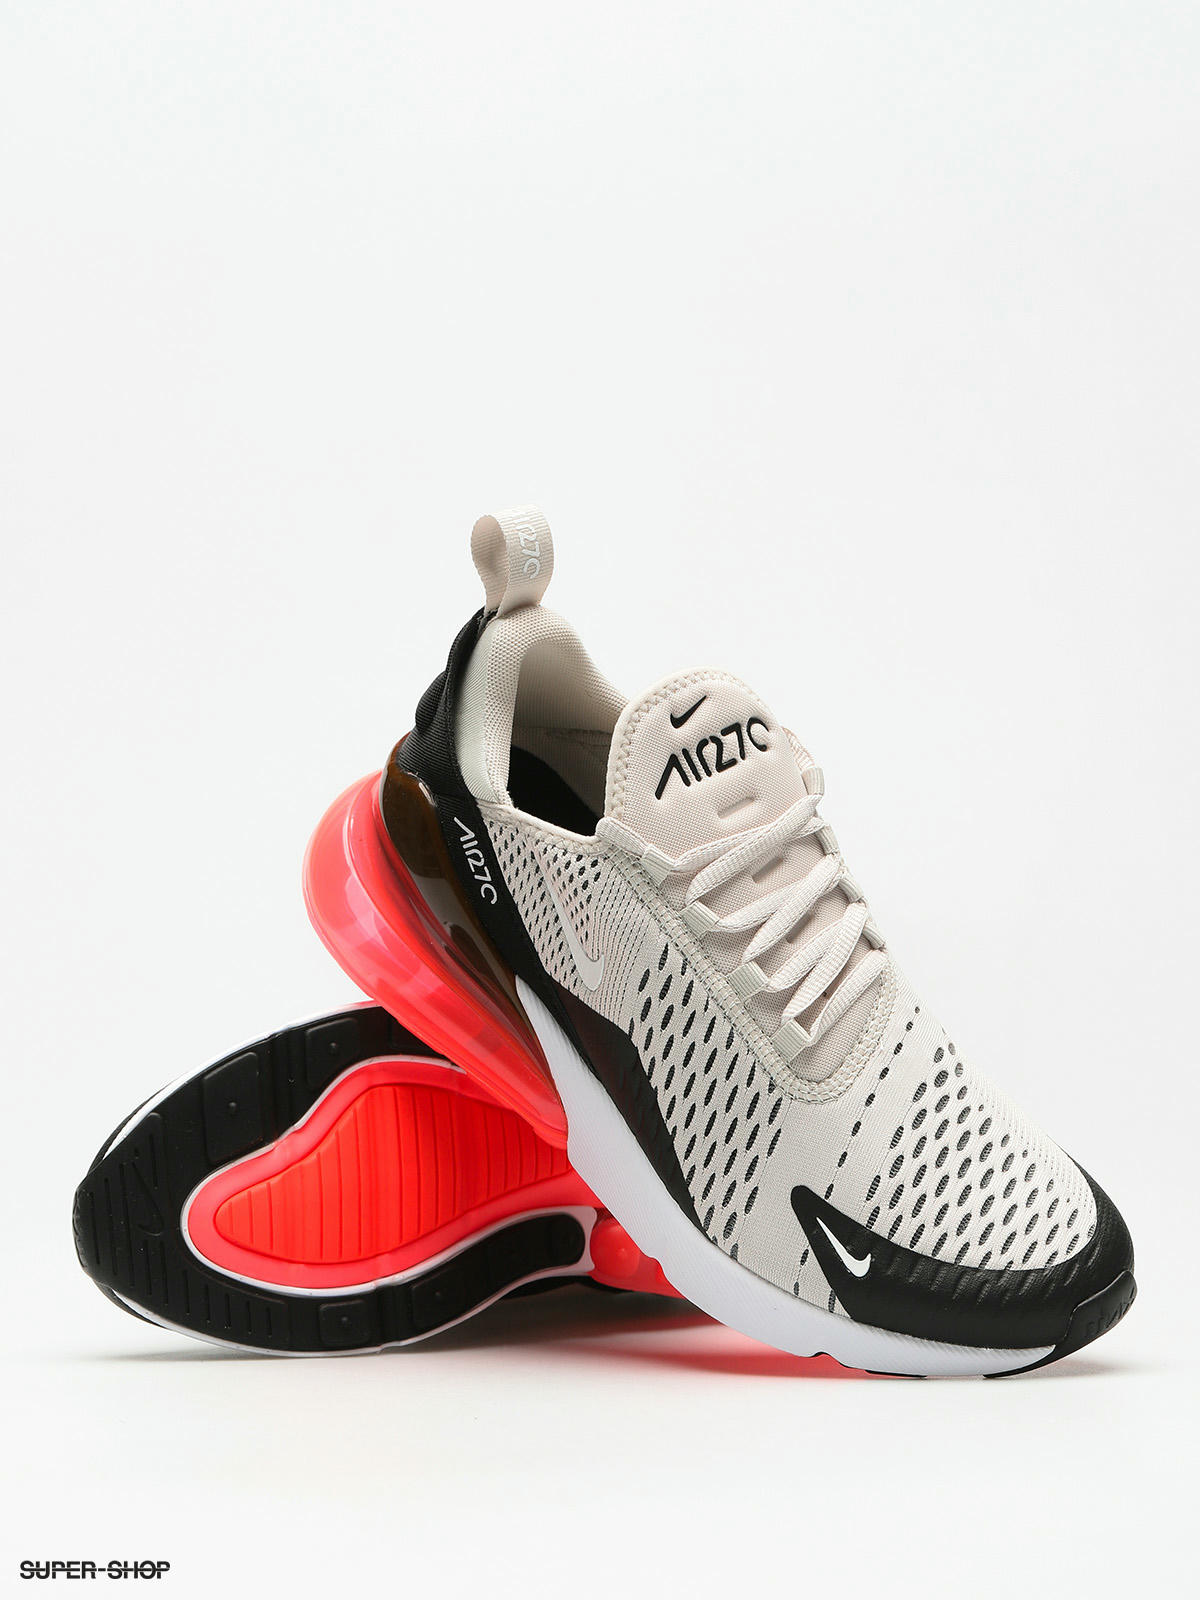 Nike 270 Shoes (black/light bone punch white)